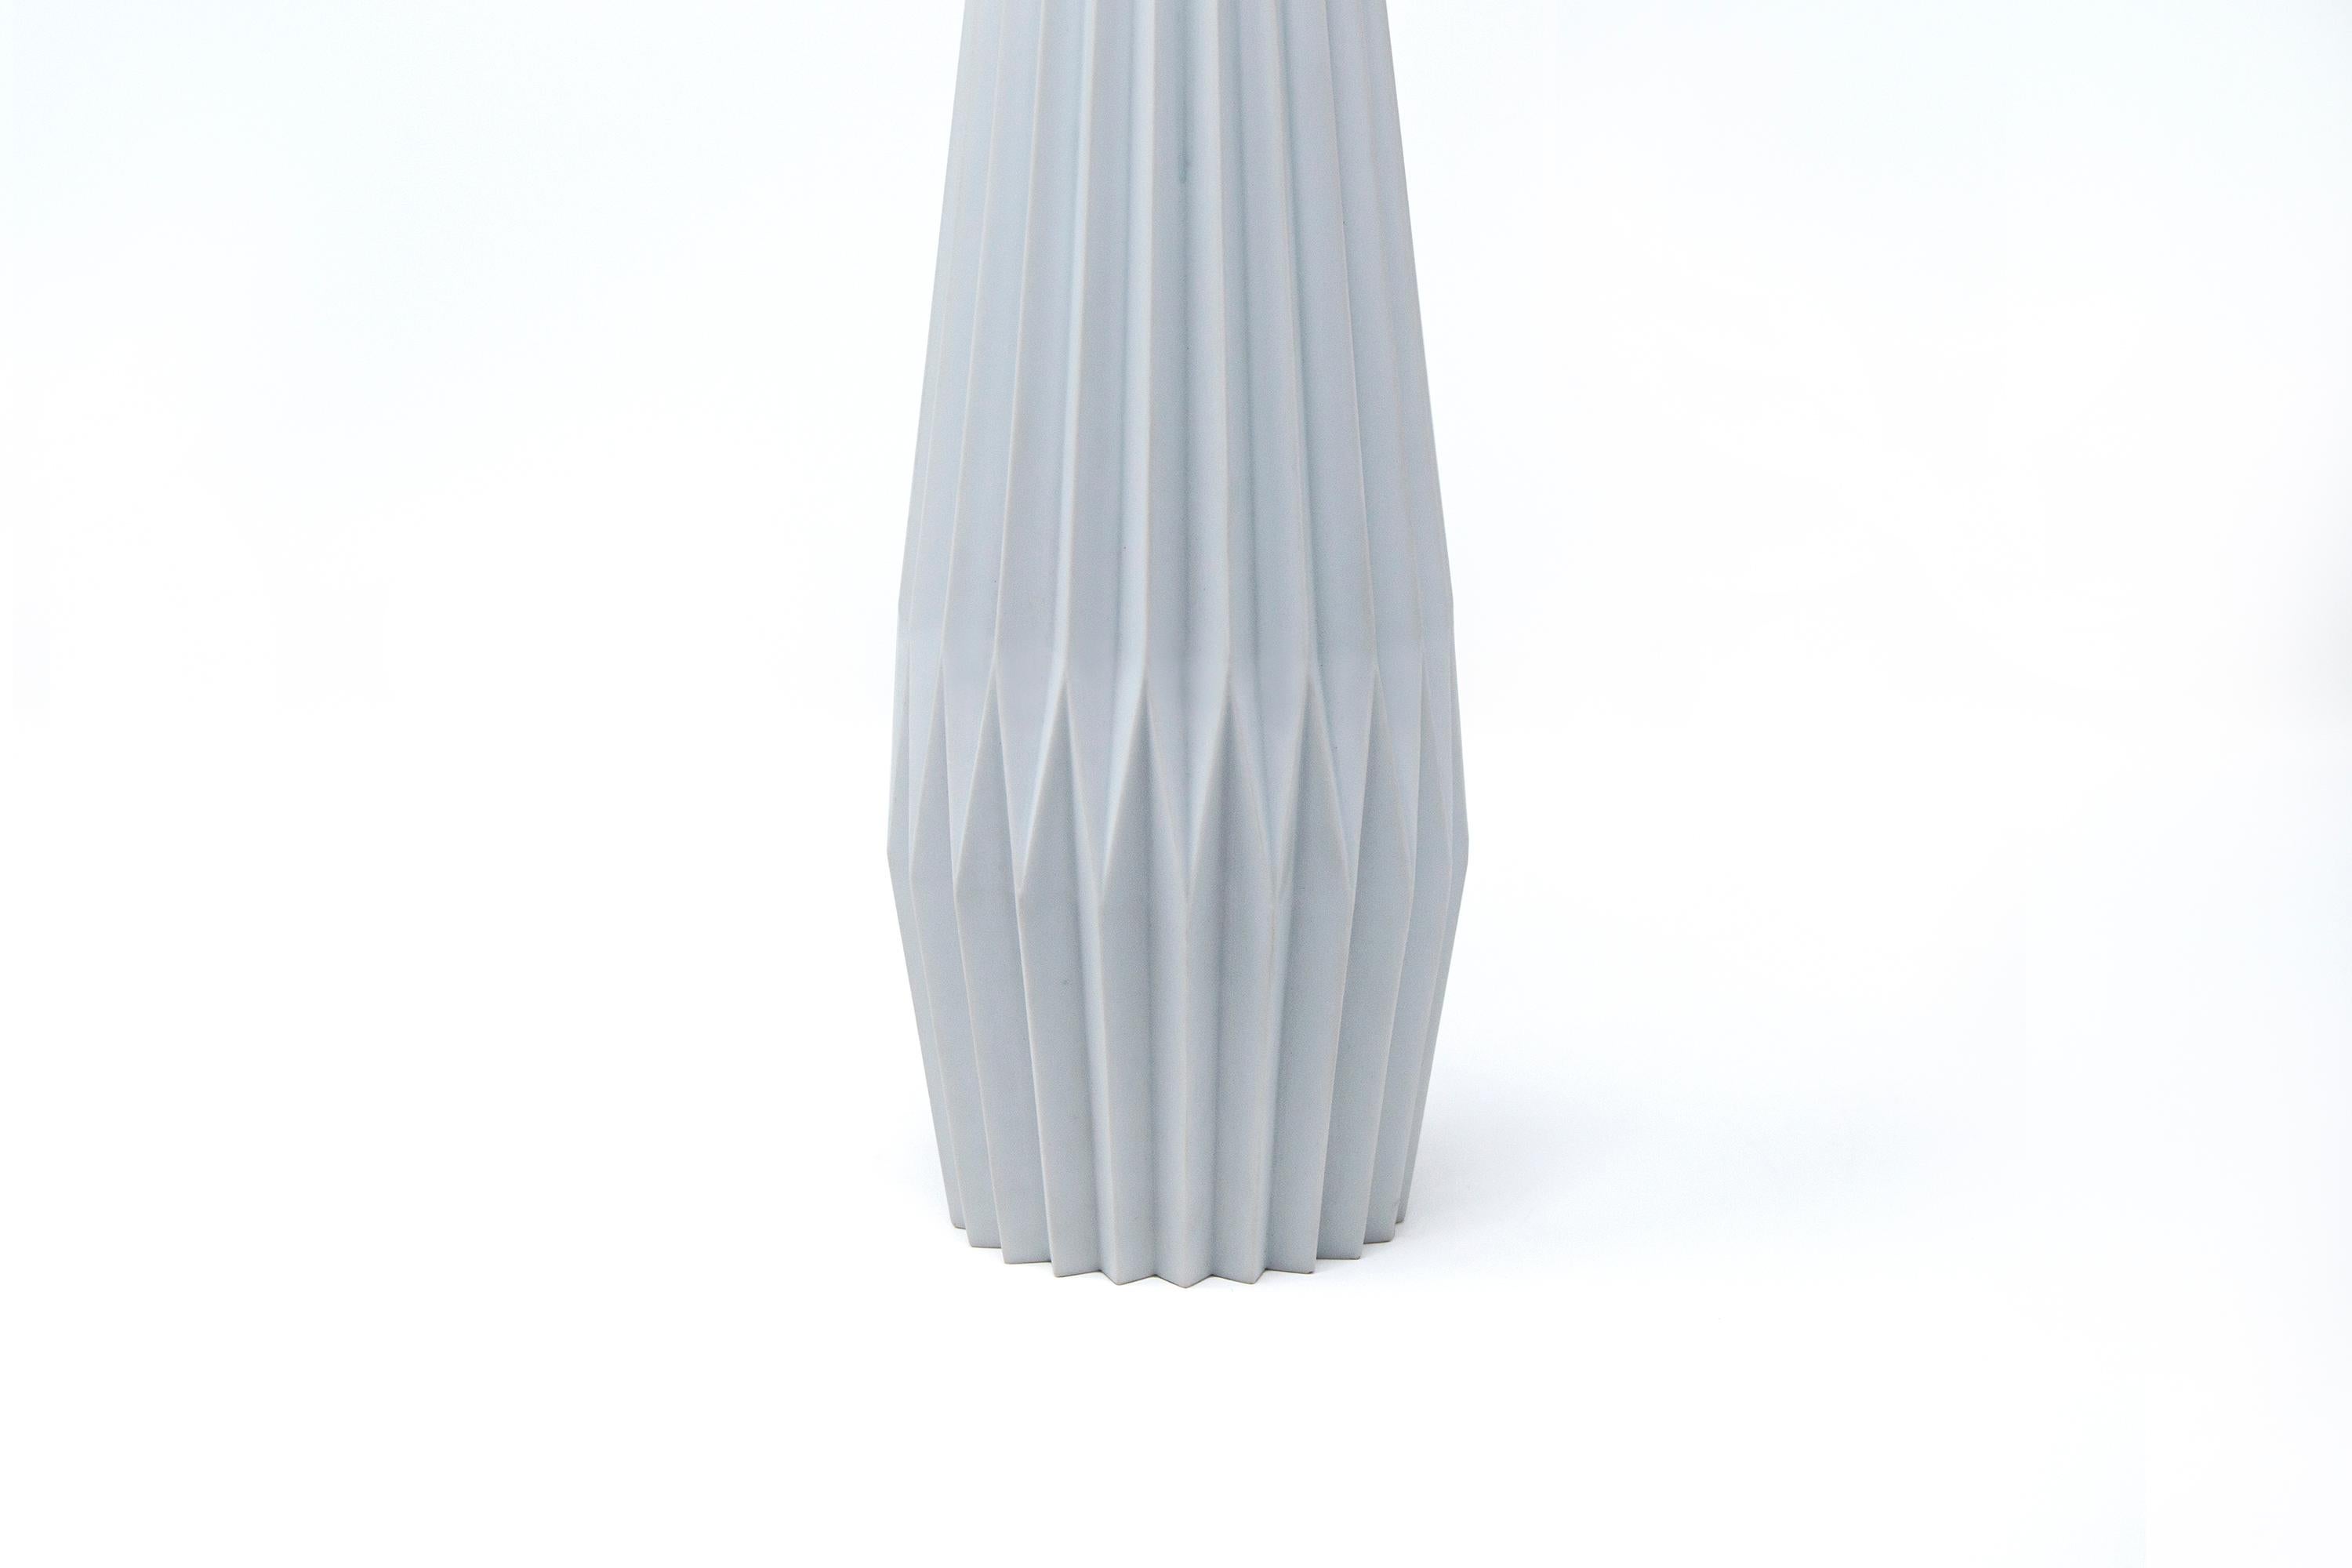 Japanese Arita Porcelain Vase 'Pliage' For Sale 4